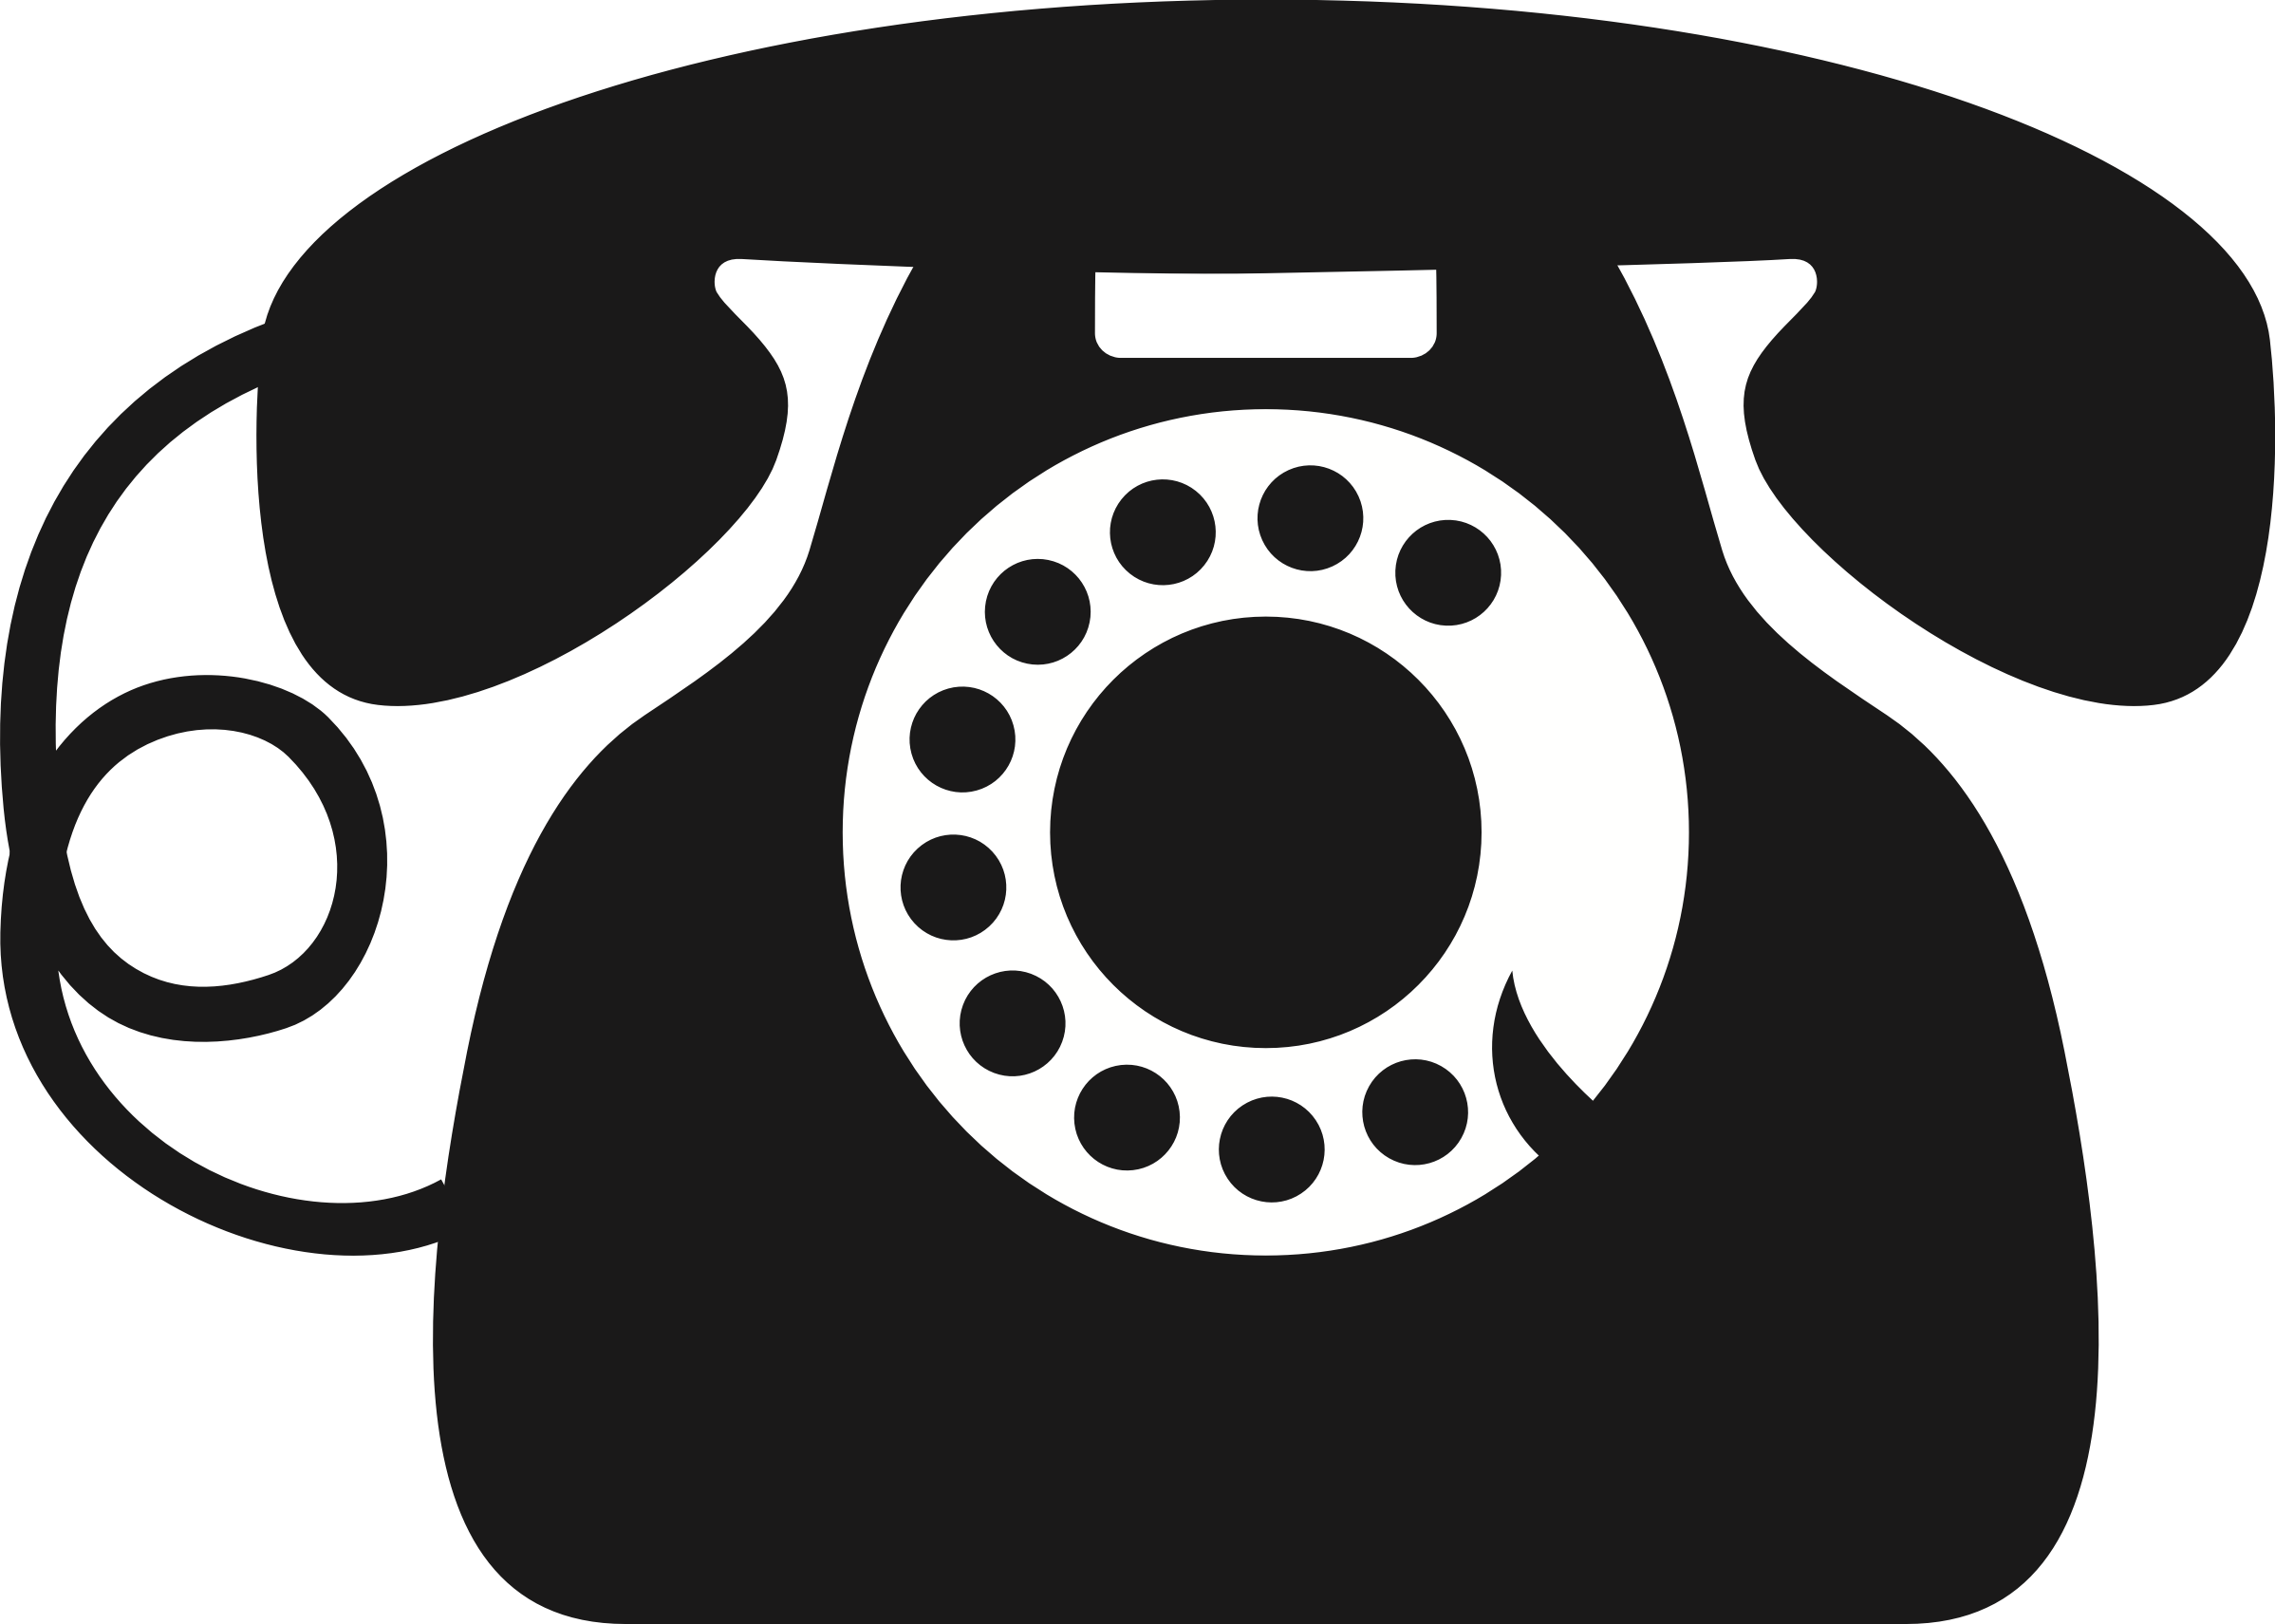 Dial telephone big image. Phone clipart rotary phone